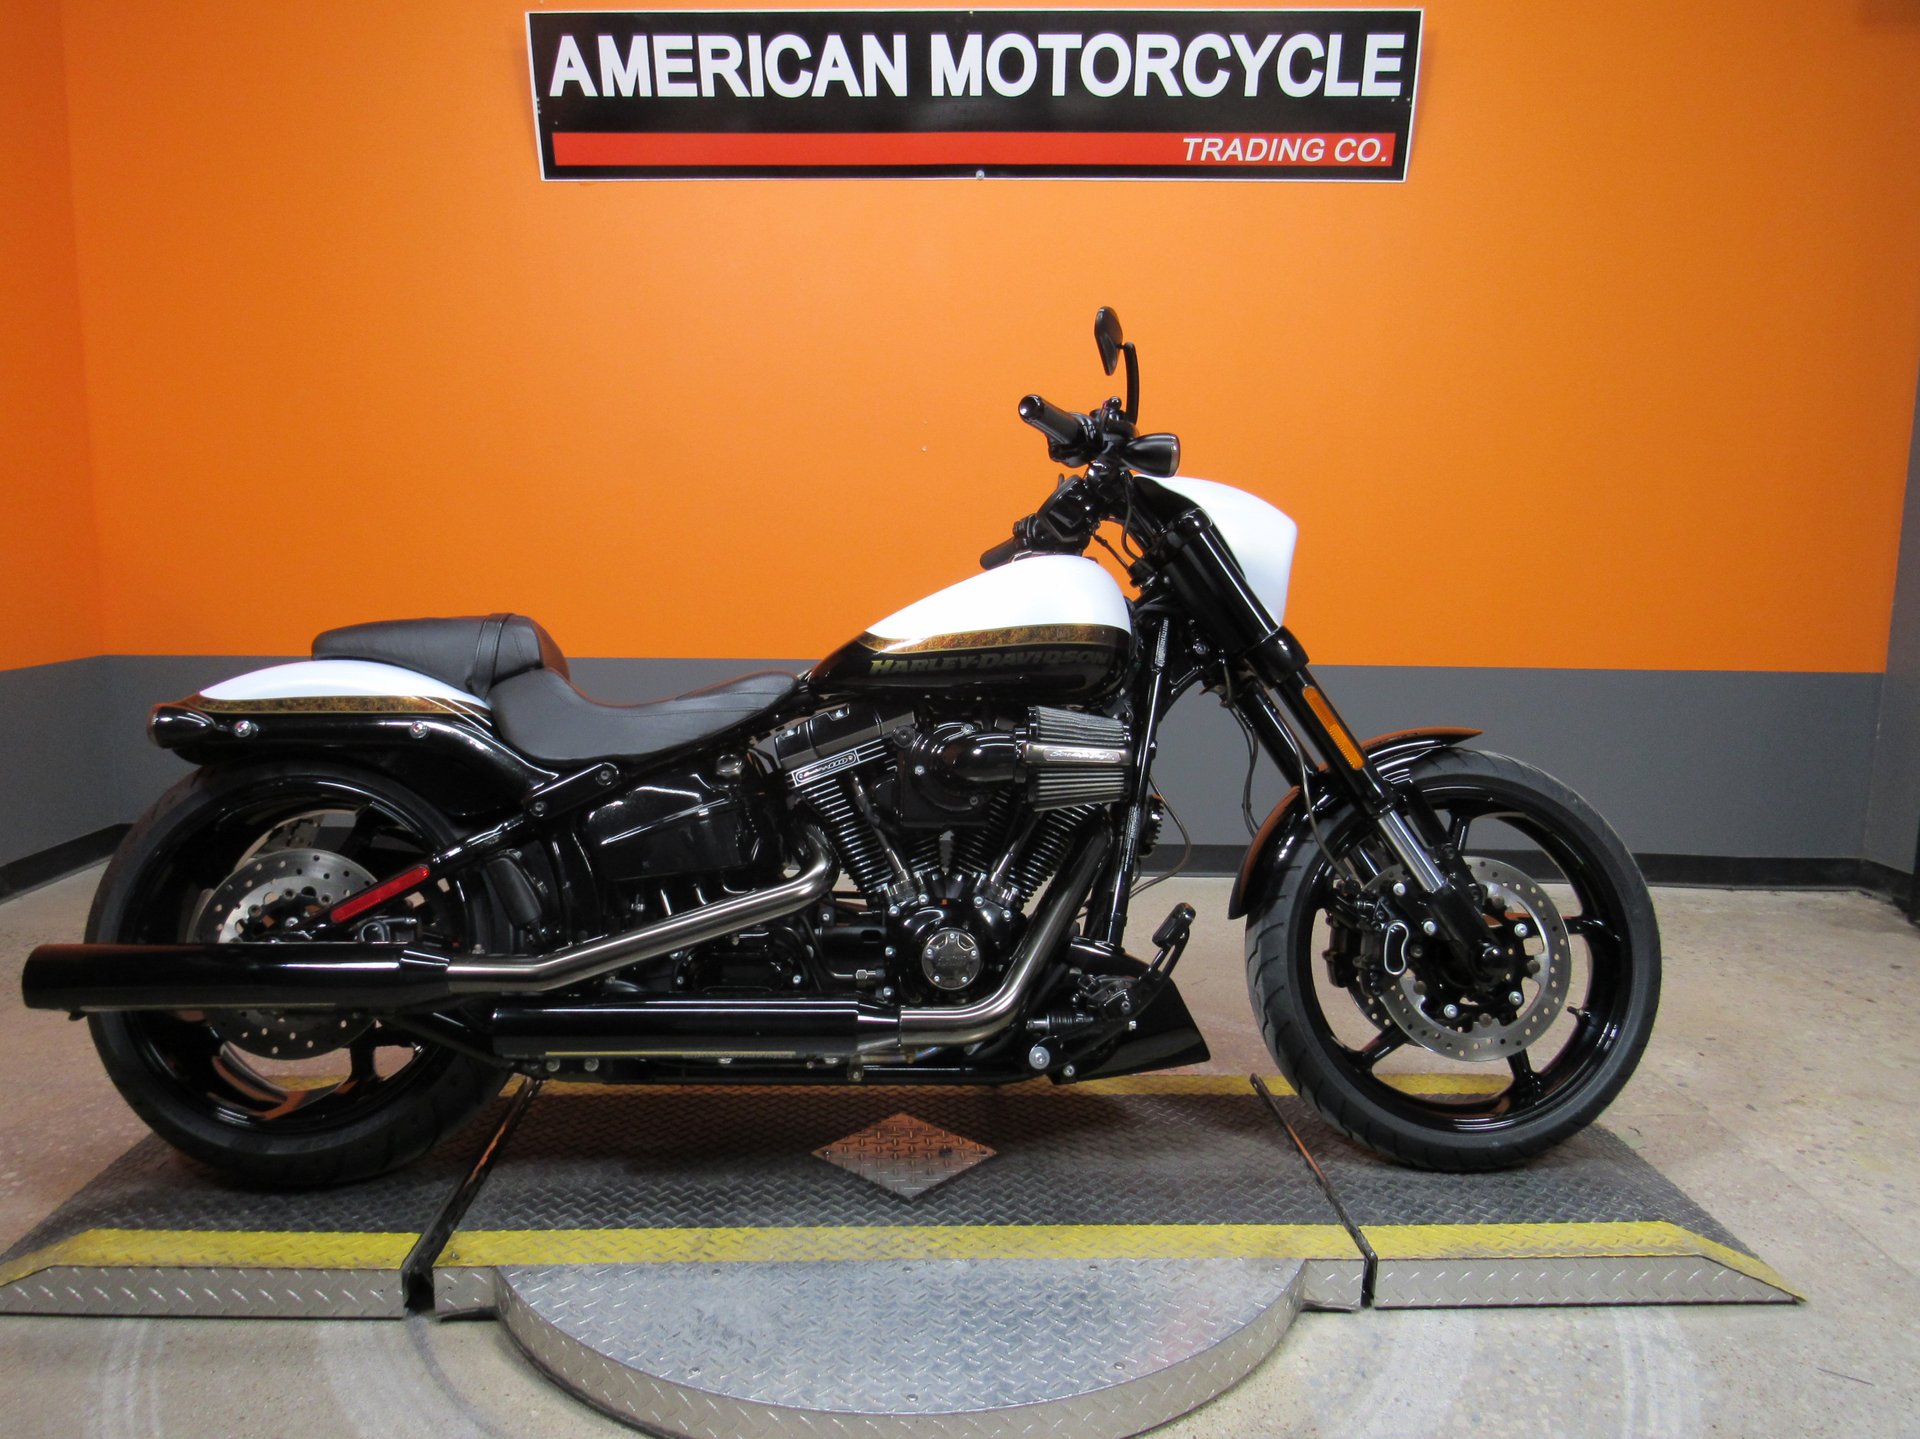 2016 Harley Davidson Cvo Softail Breakout American Motorcycle Trading